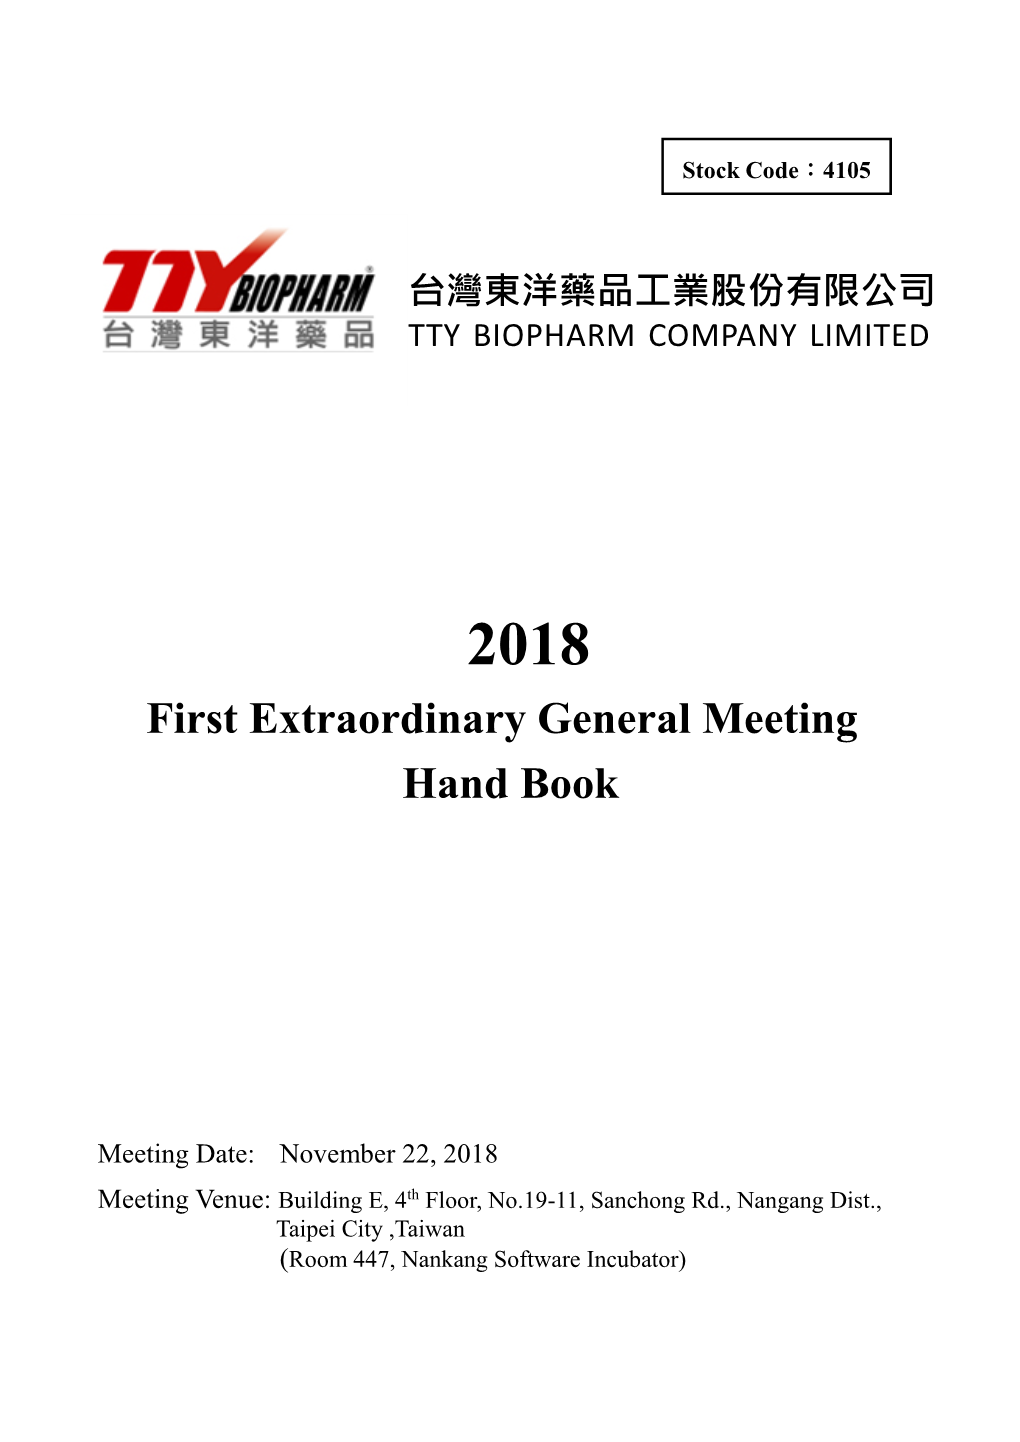 First Extraordinary General Meeting Hand Book